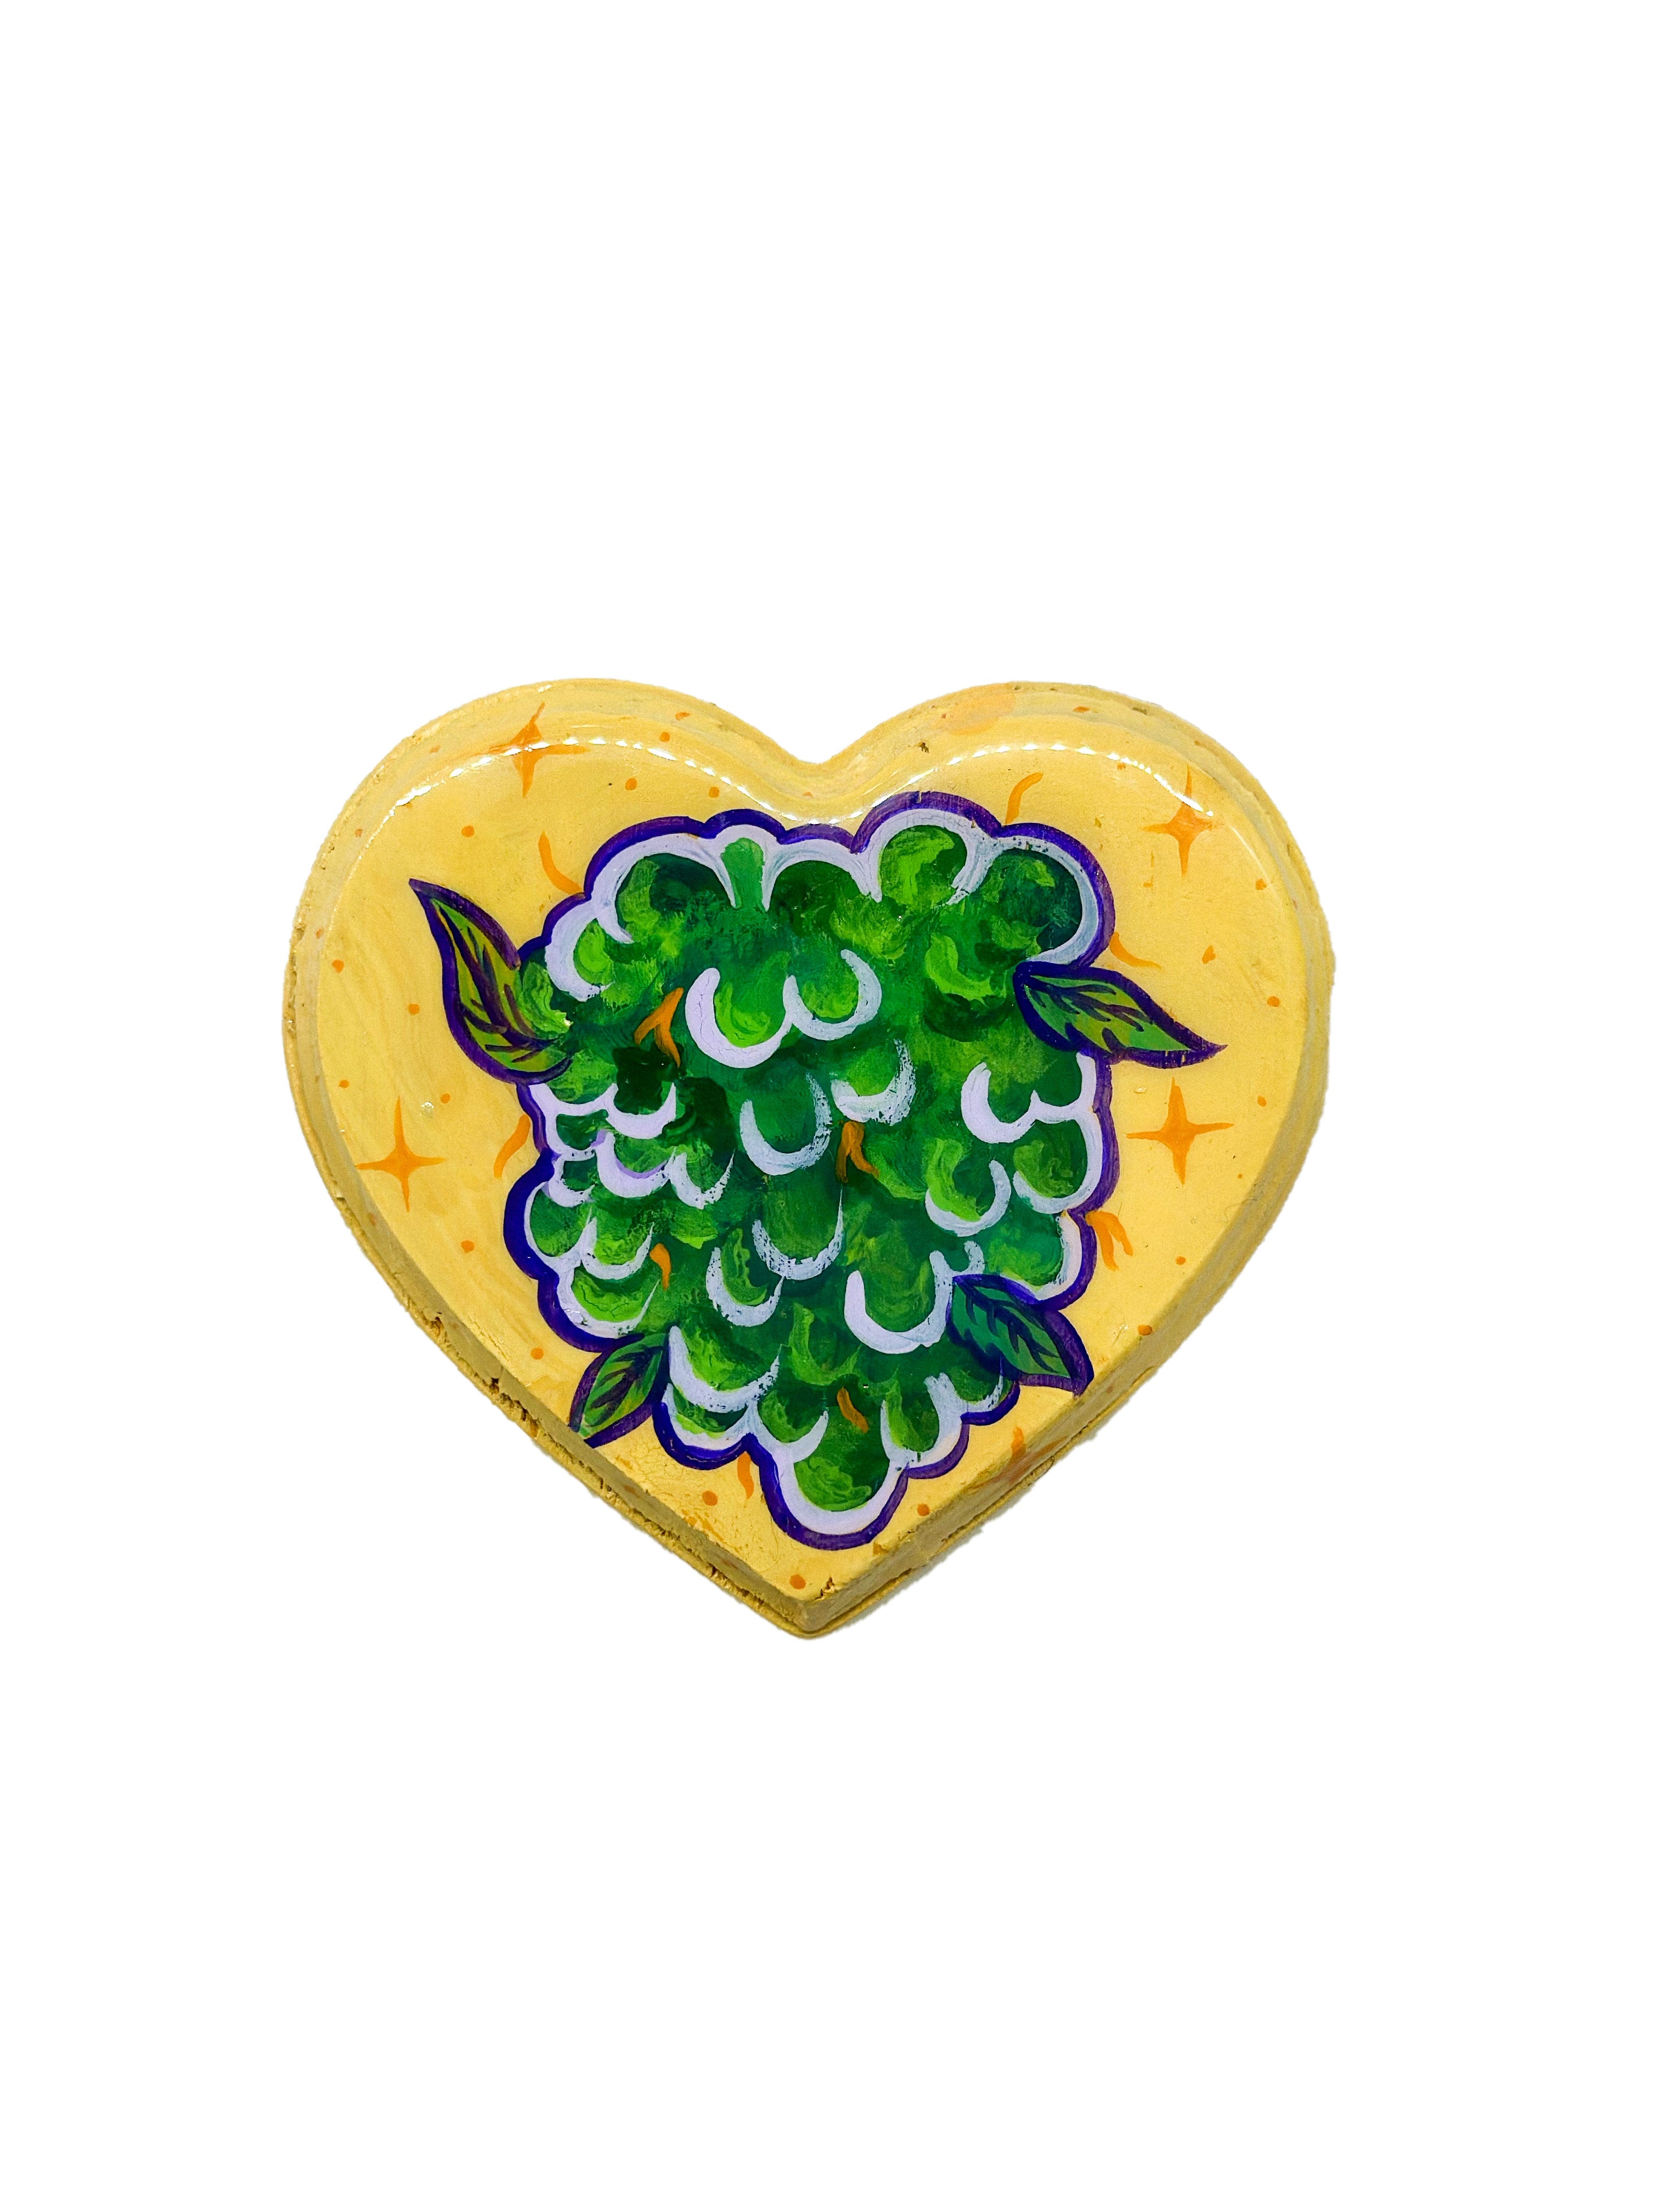 Bright green and purple marijuana nug on a yellow heart shaped canvas